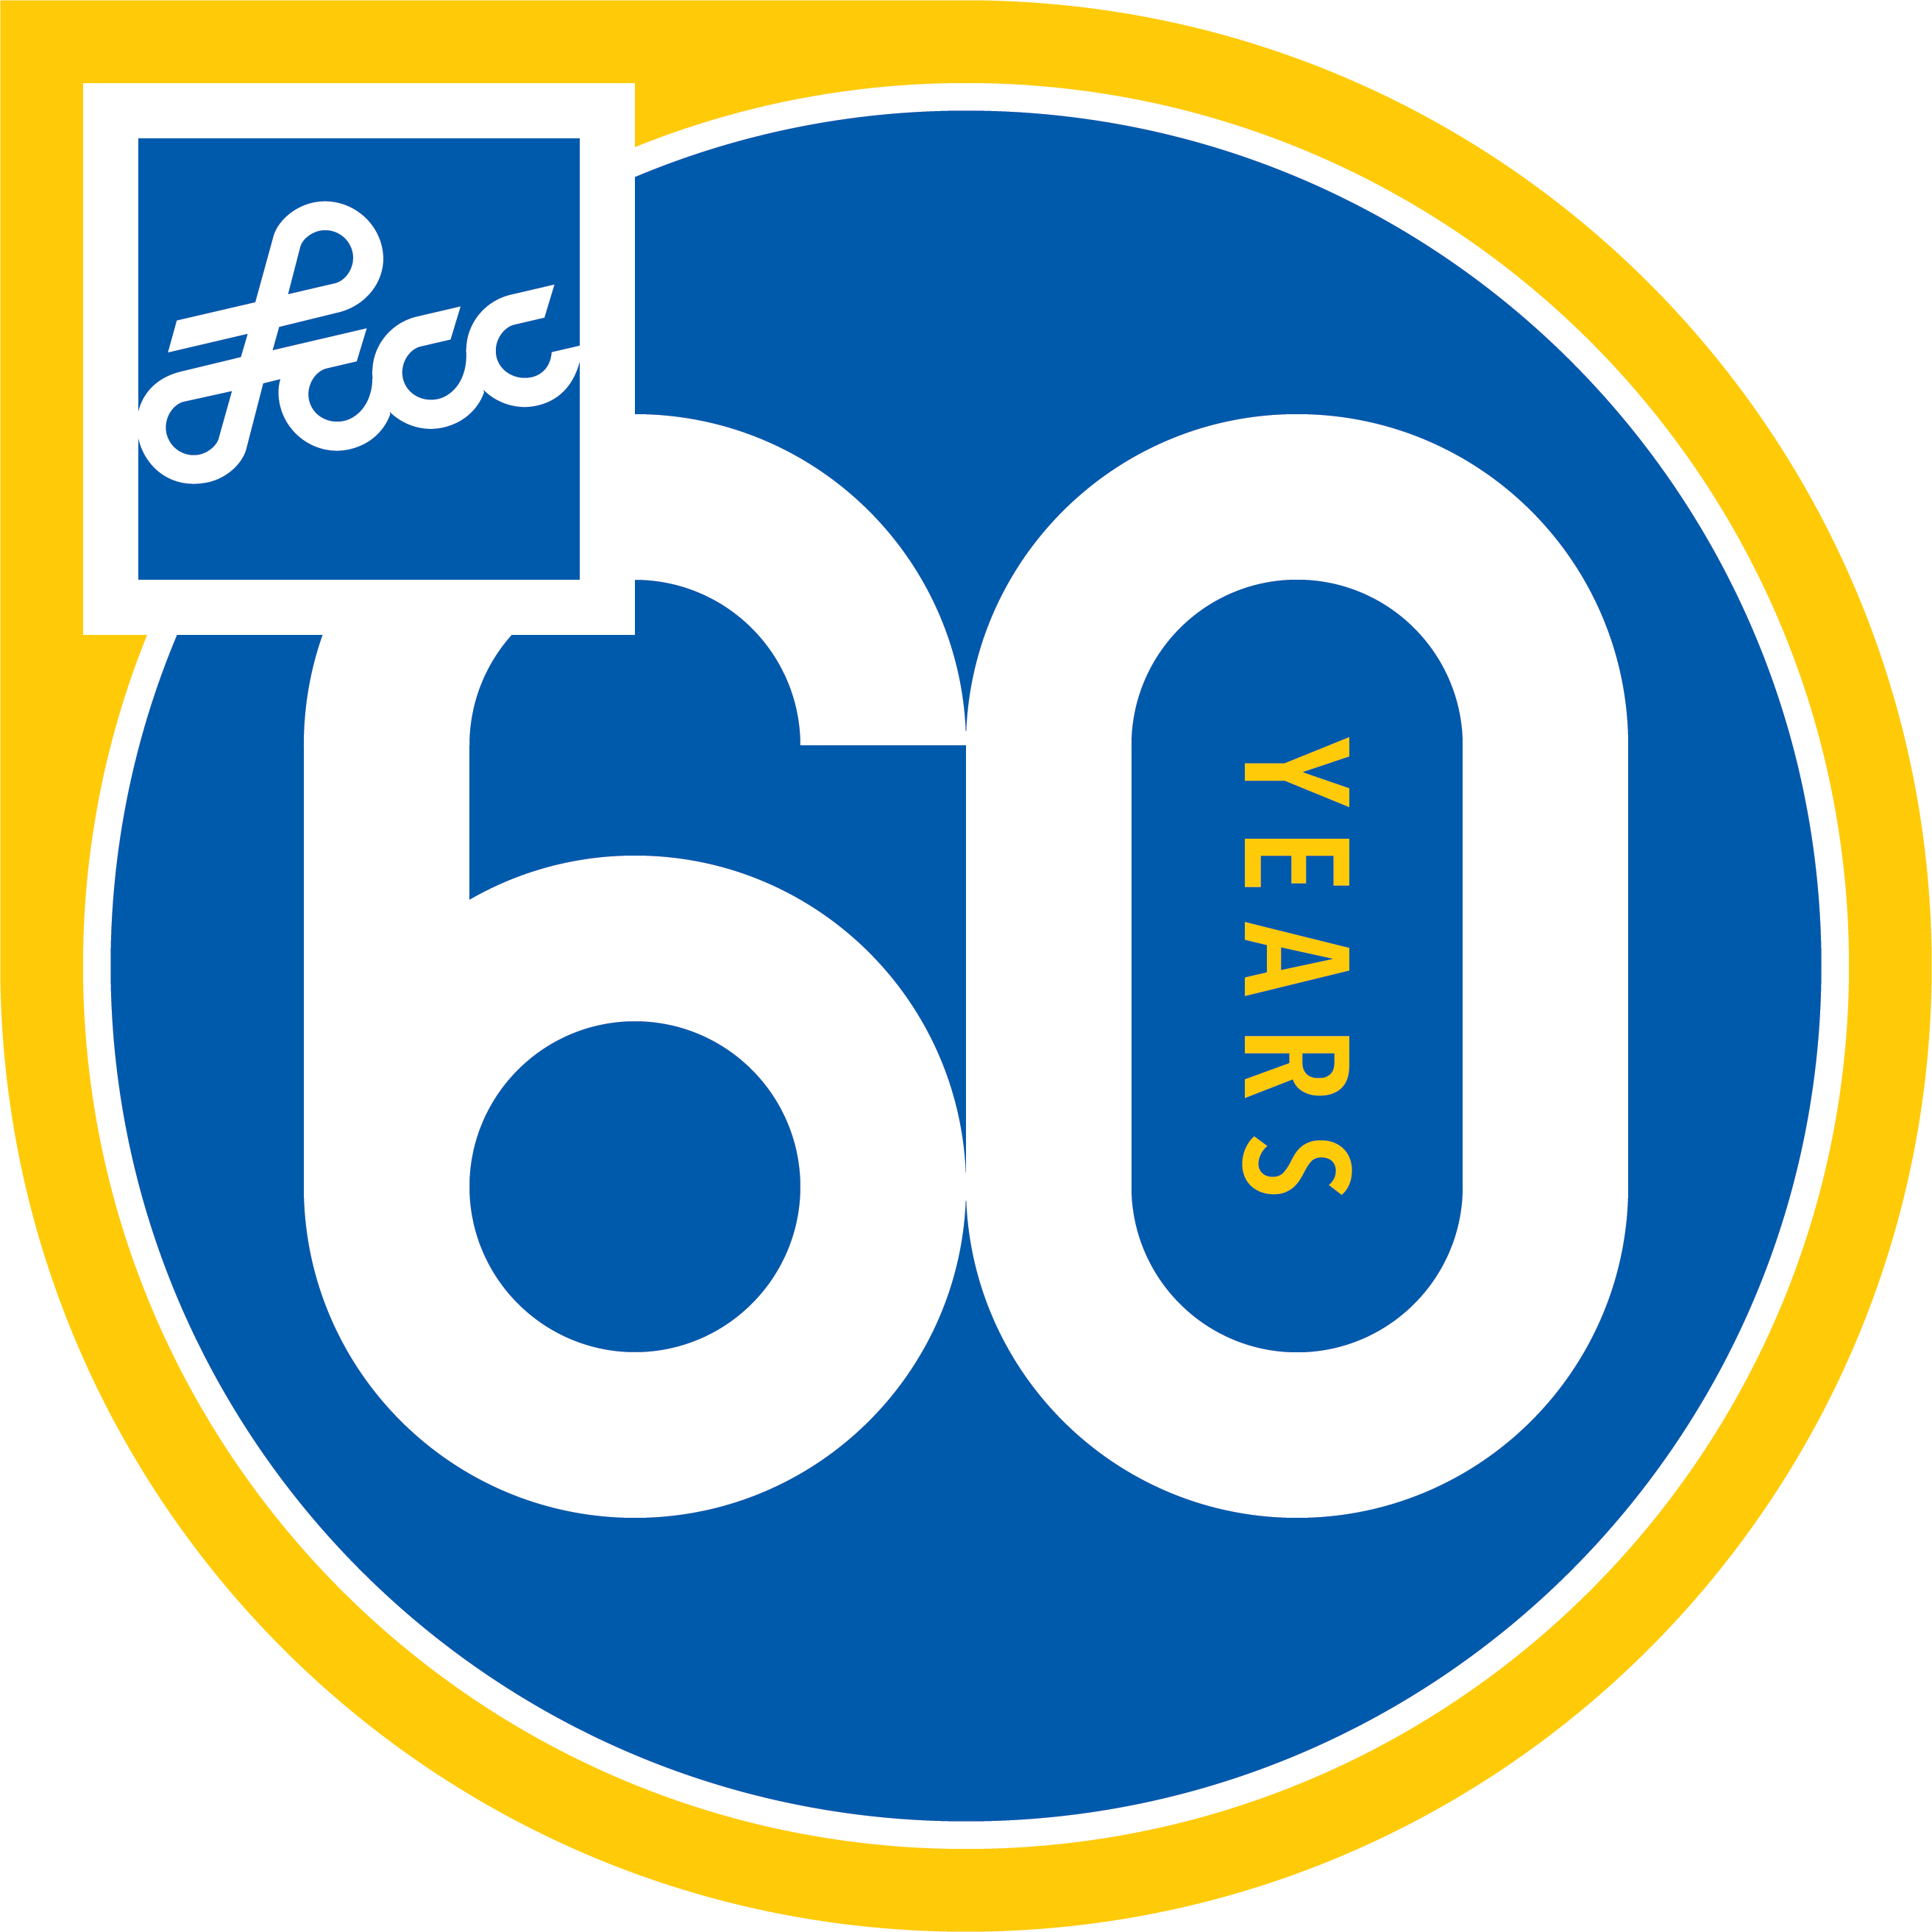 LCCC 60 Years logo